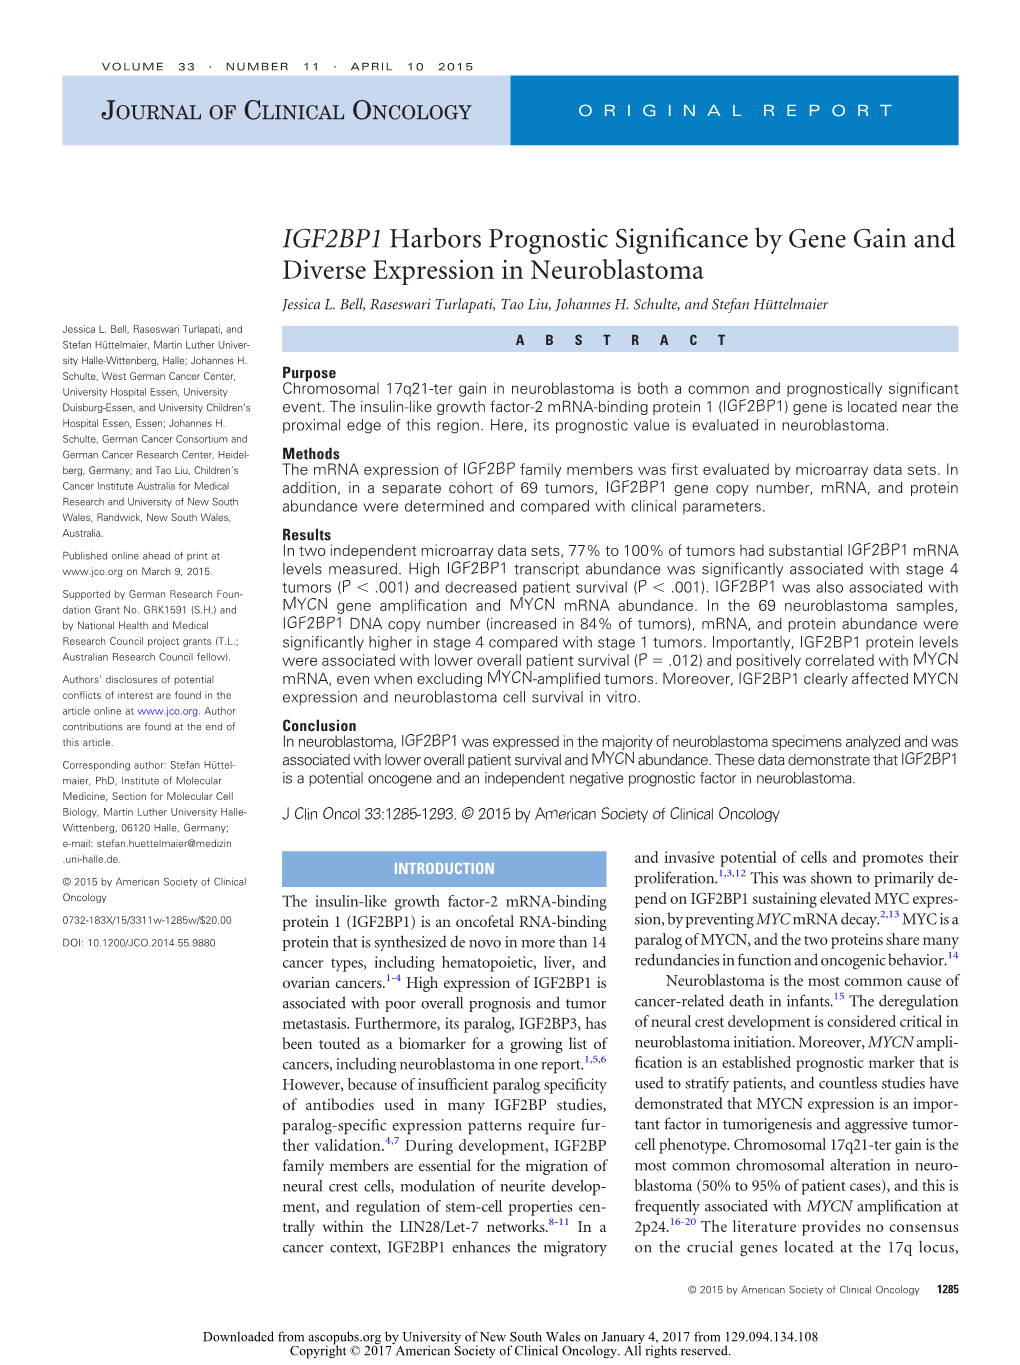 IGF2BP1 Harbors Prognostic Significance by Gene Gain and Diverse Expression in Neuroblastoma